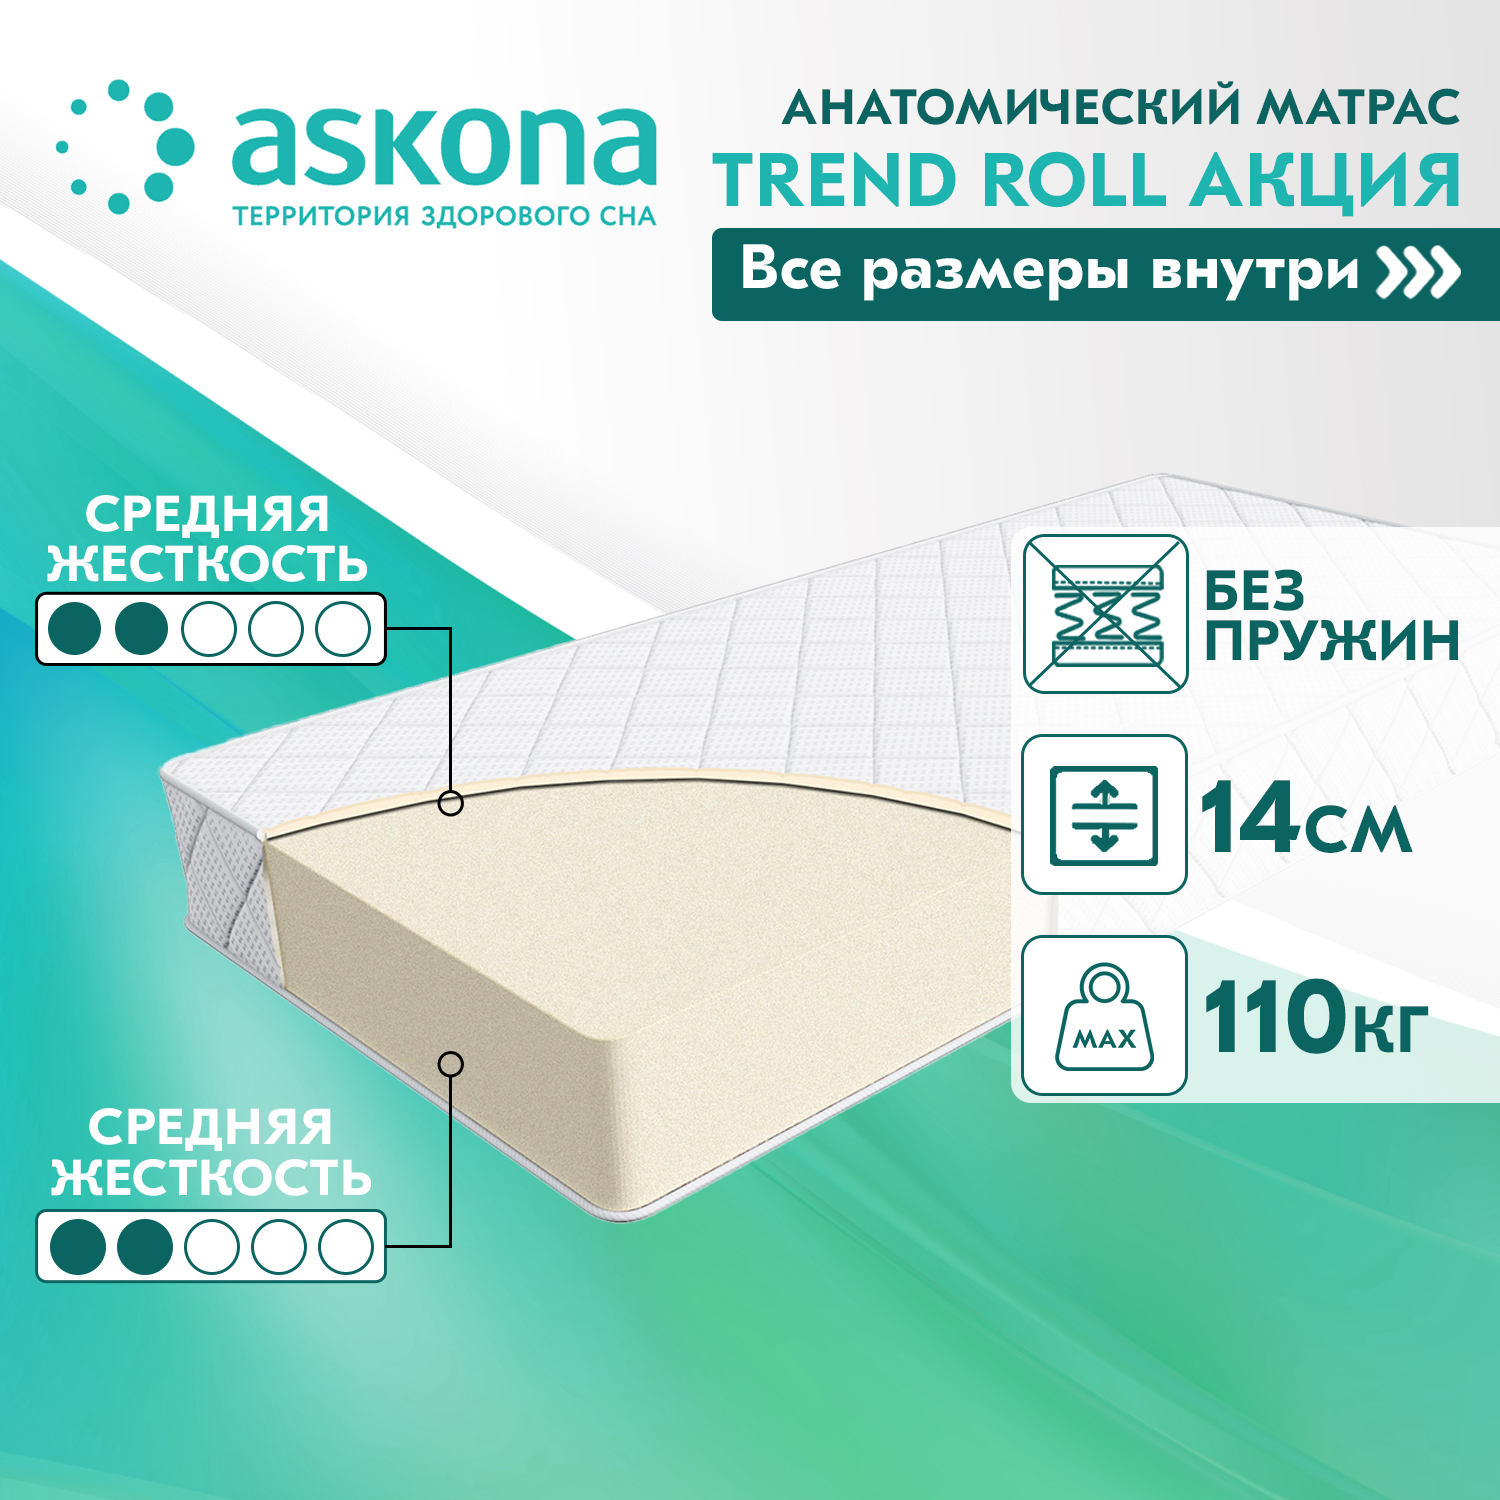 Askona trend Roll 160x200